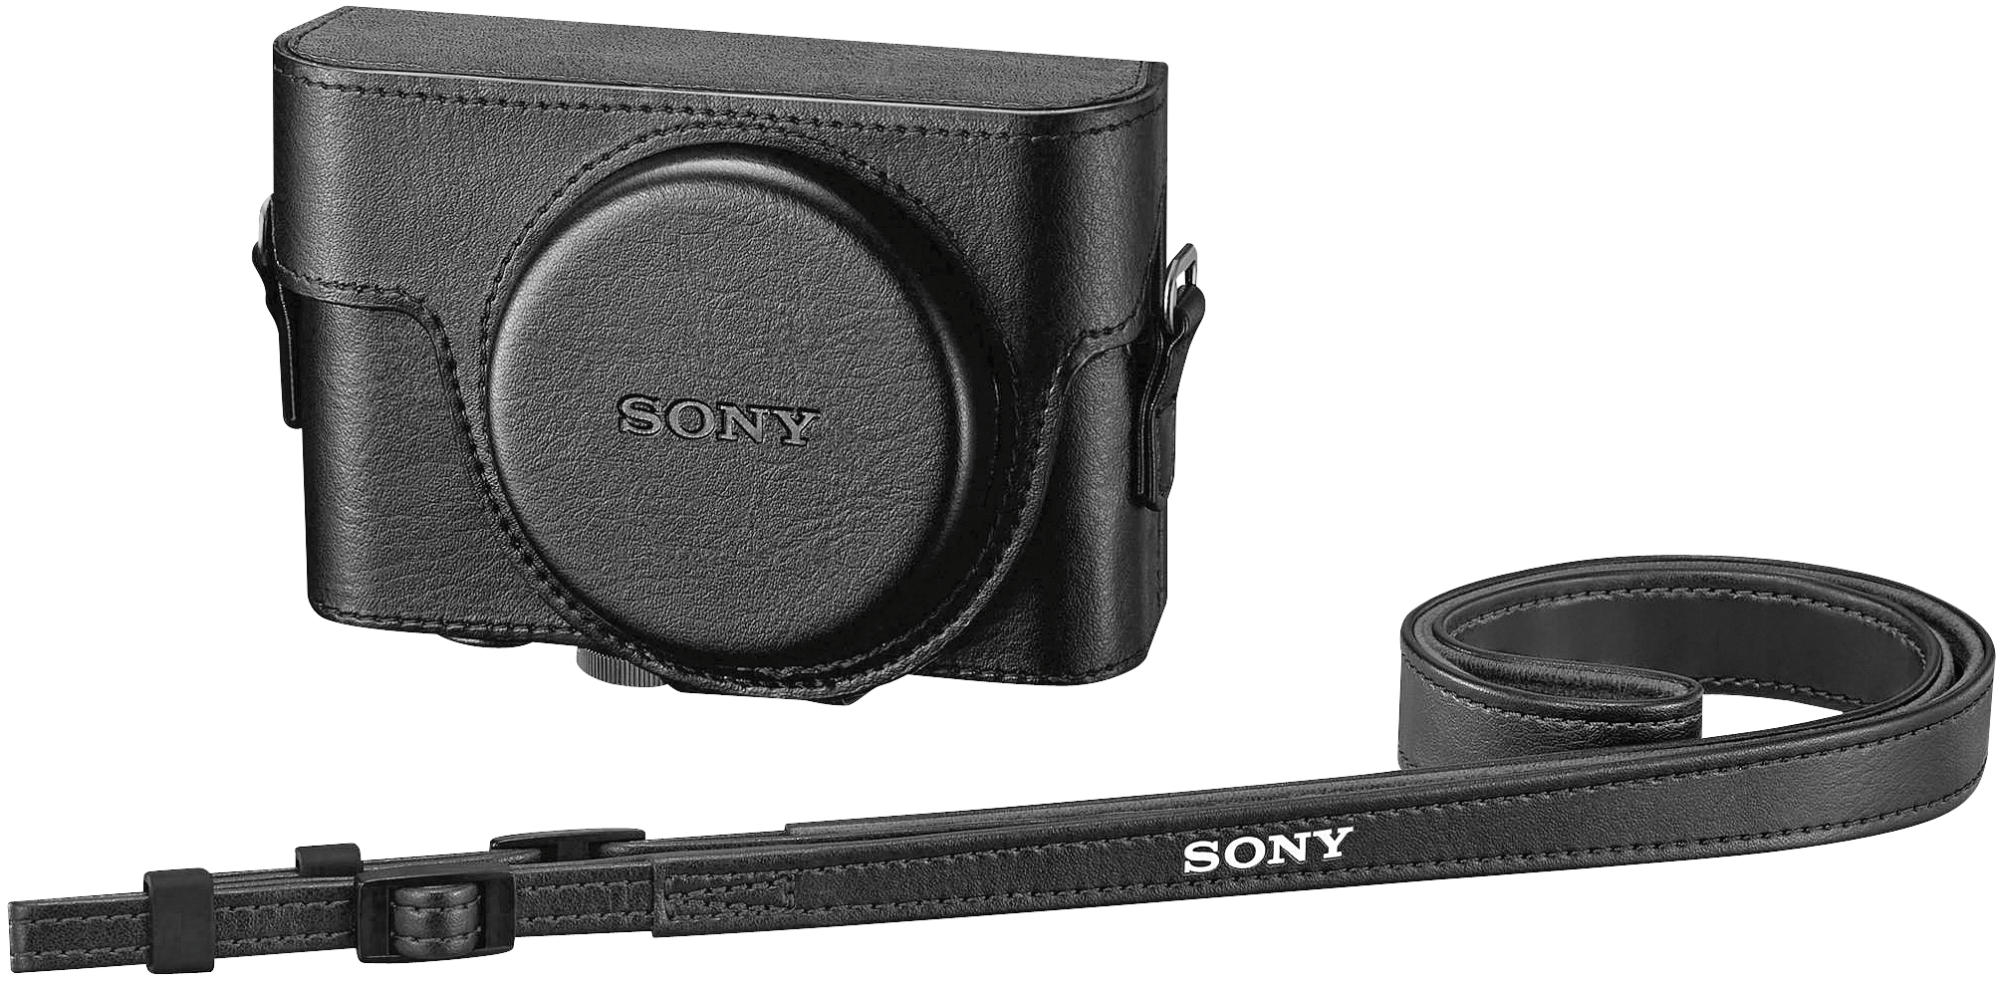 SONY Cyber-shot DSC-RX100 VA Zeiss NFC Xtra Digitalkamera opt. KIT Schwarz, Fine/TFT-LCD, , WLAN Zoom, 2.9x